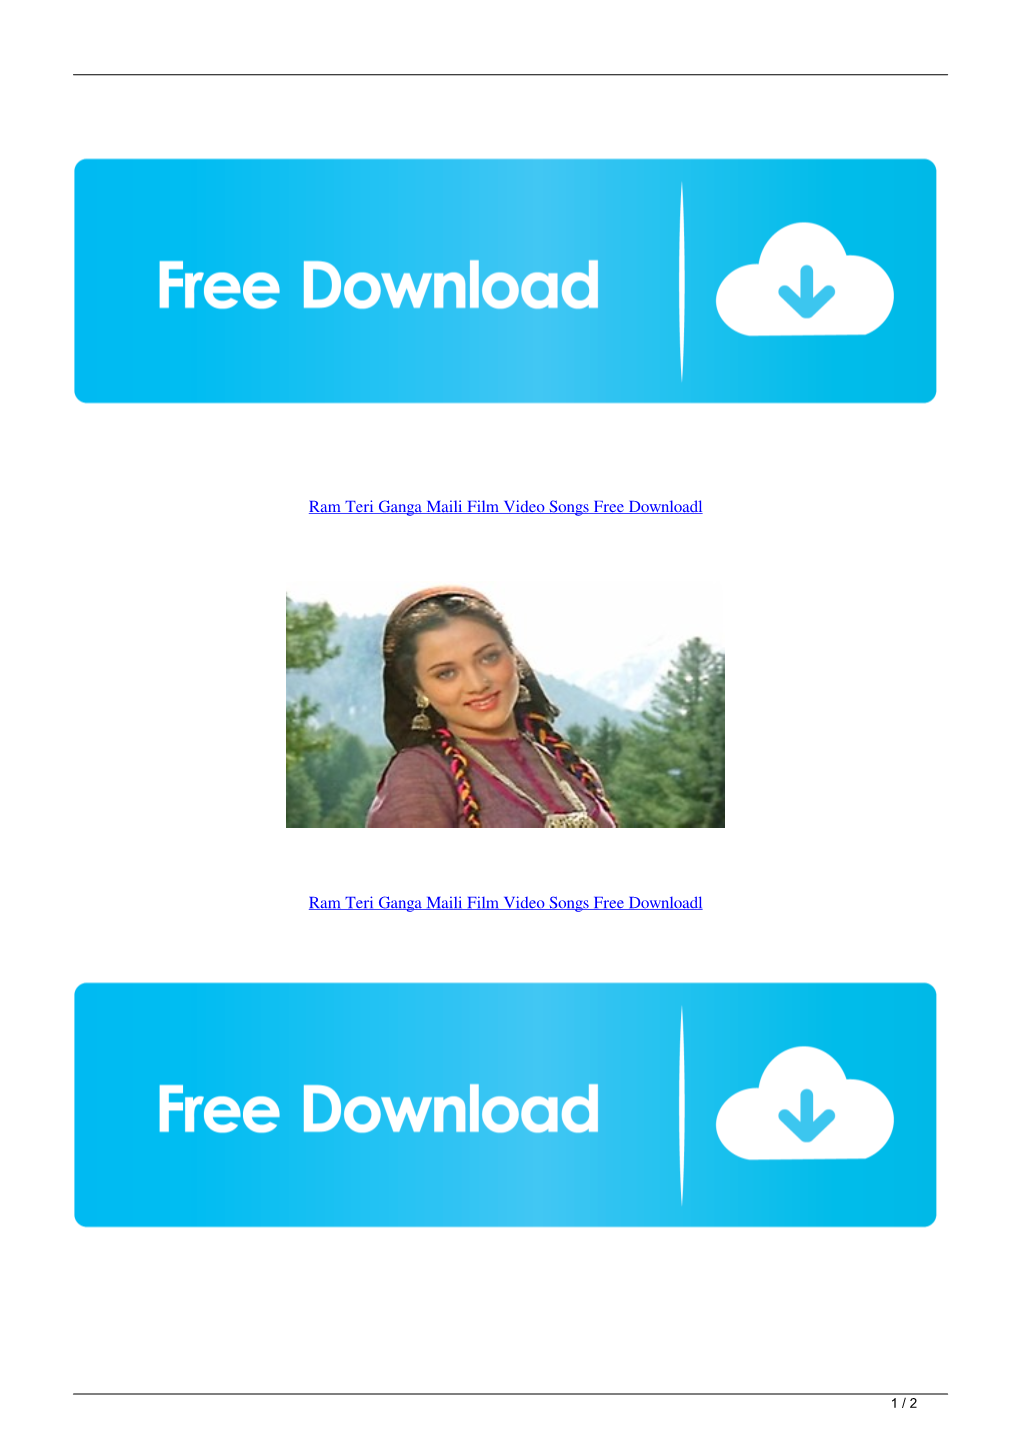 Ram Teri Ganga Maili Film Video Songs Free Downloadl